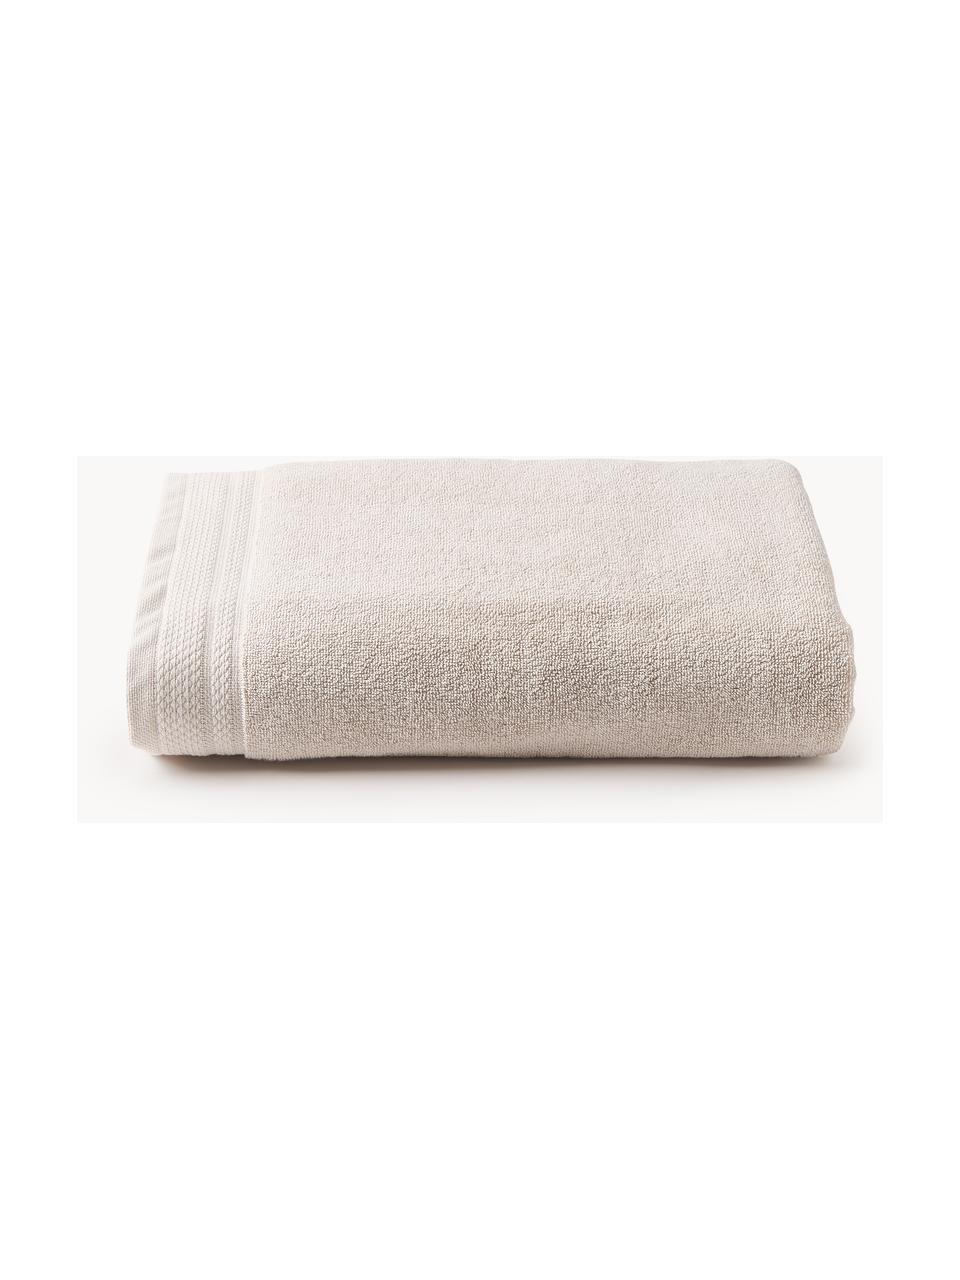 Asciugamano in cotone organico in varie misure Premium, 100% cotone organico certificato GOTS (da GCL International, GCL-300517).
Qualità pesante, 600 g/m², Beige chiaro, Asciugamano, Larg. 50 x Lung. 100 cm